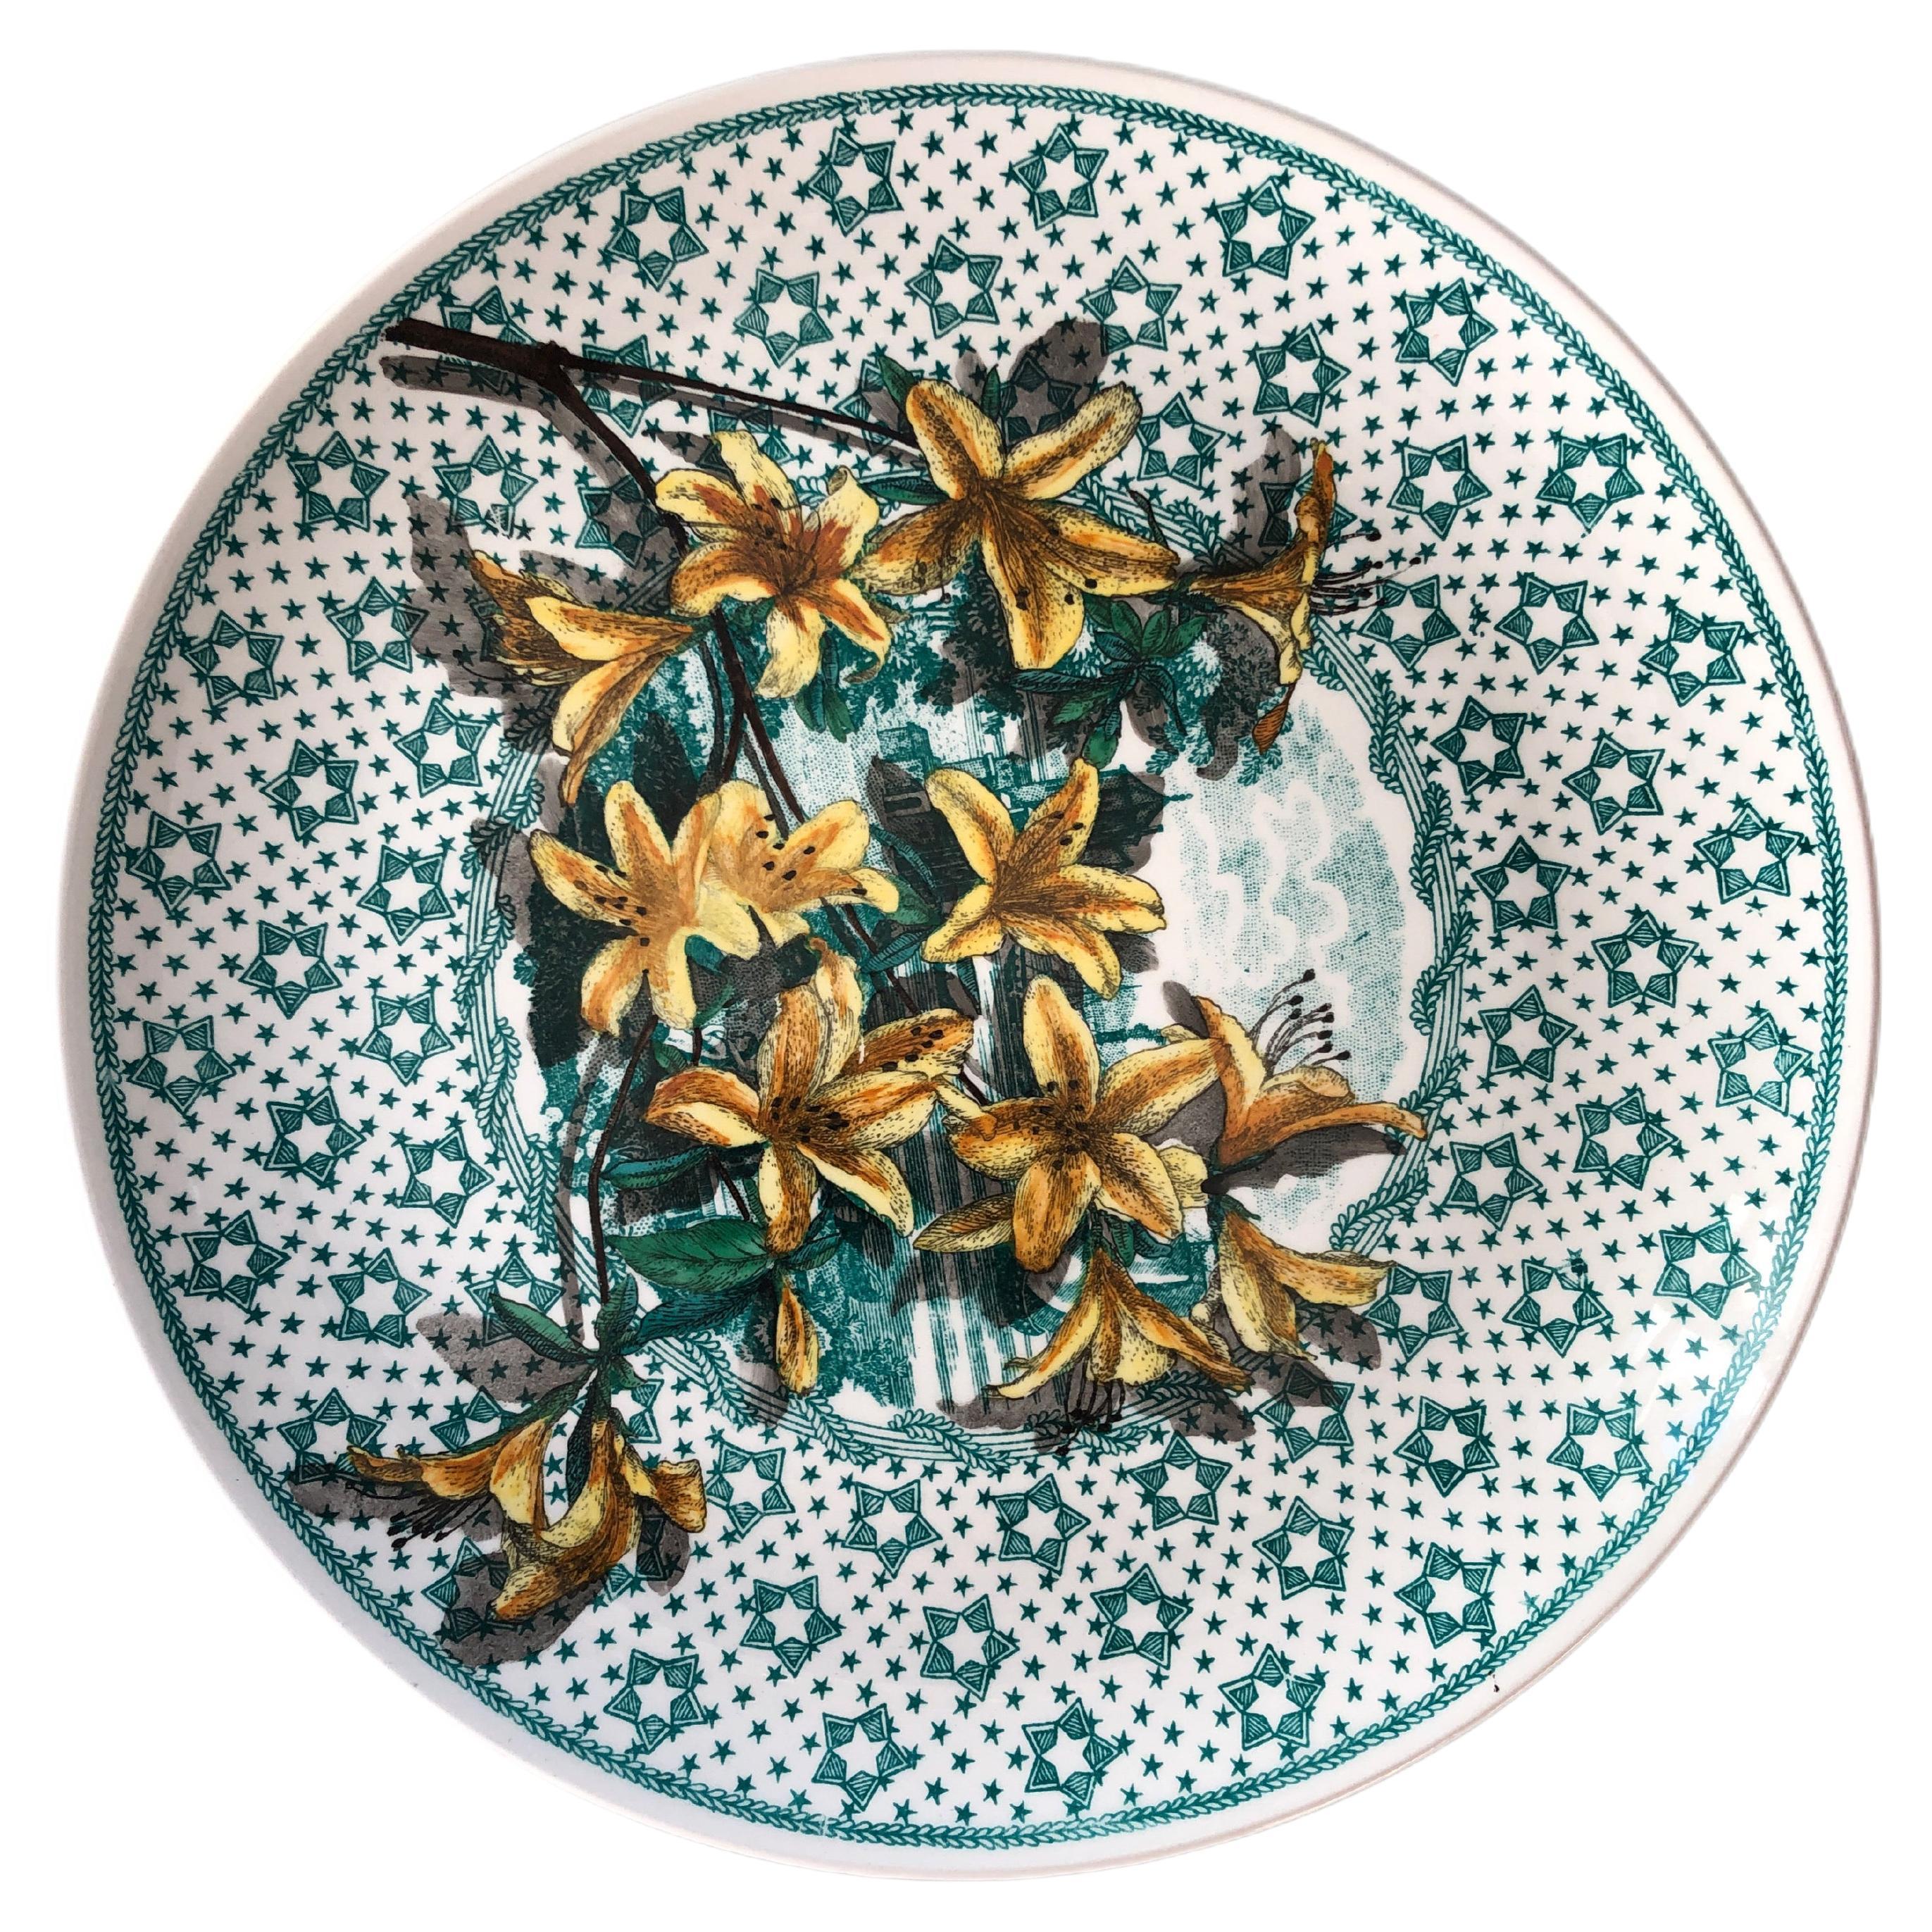 Six Mid-Century Modern Handpainted Plates by Piero Fornasetti, "Floralia", 1950s